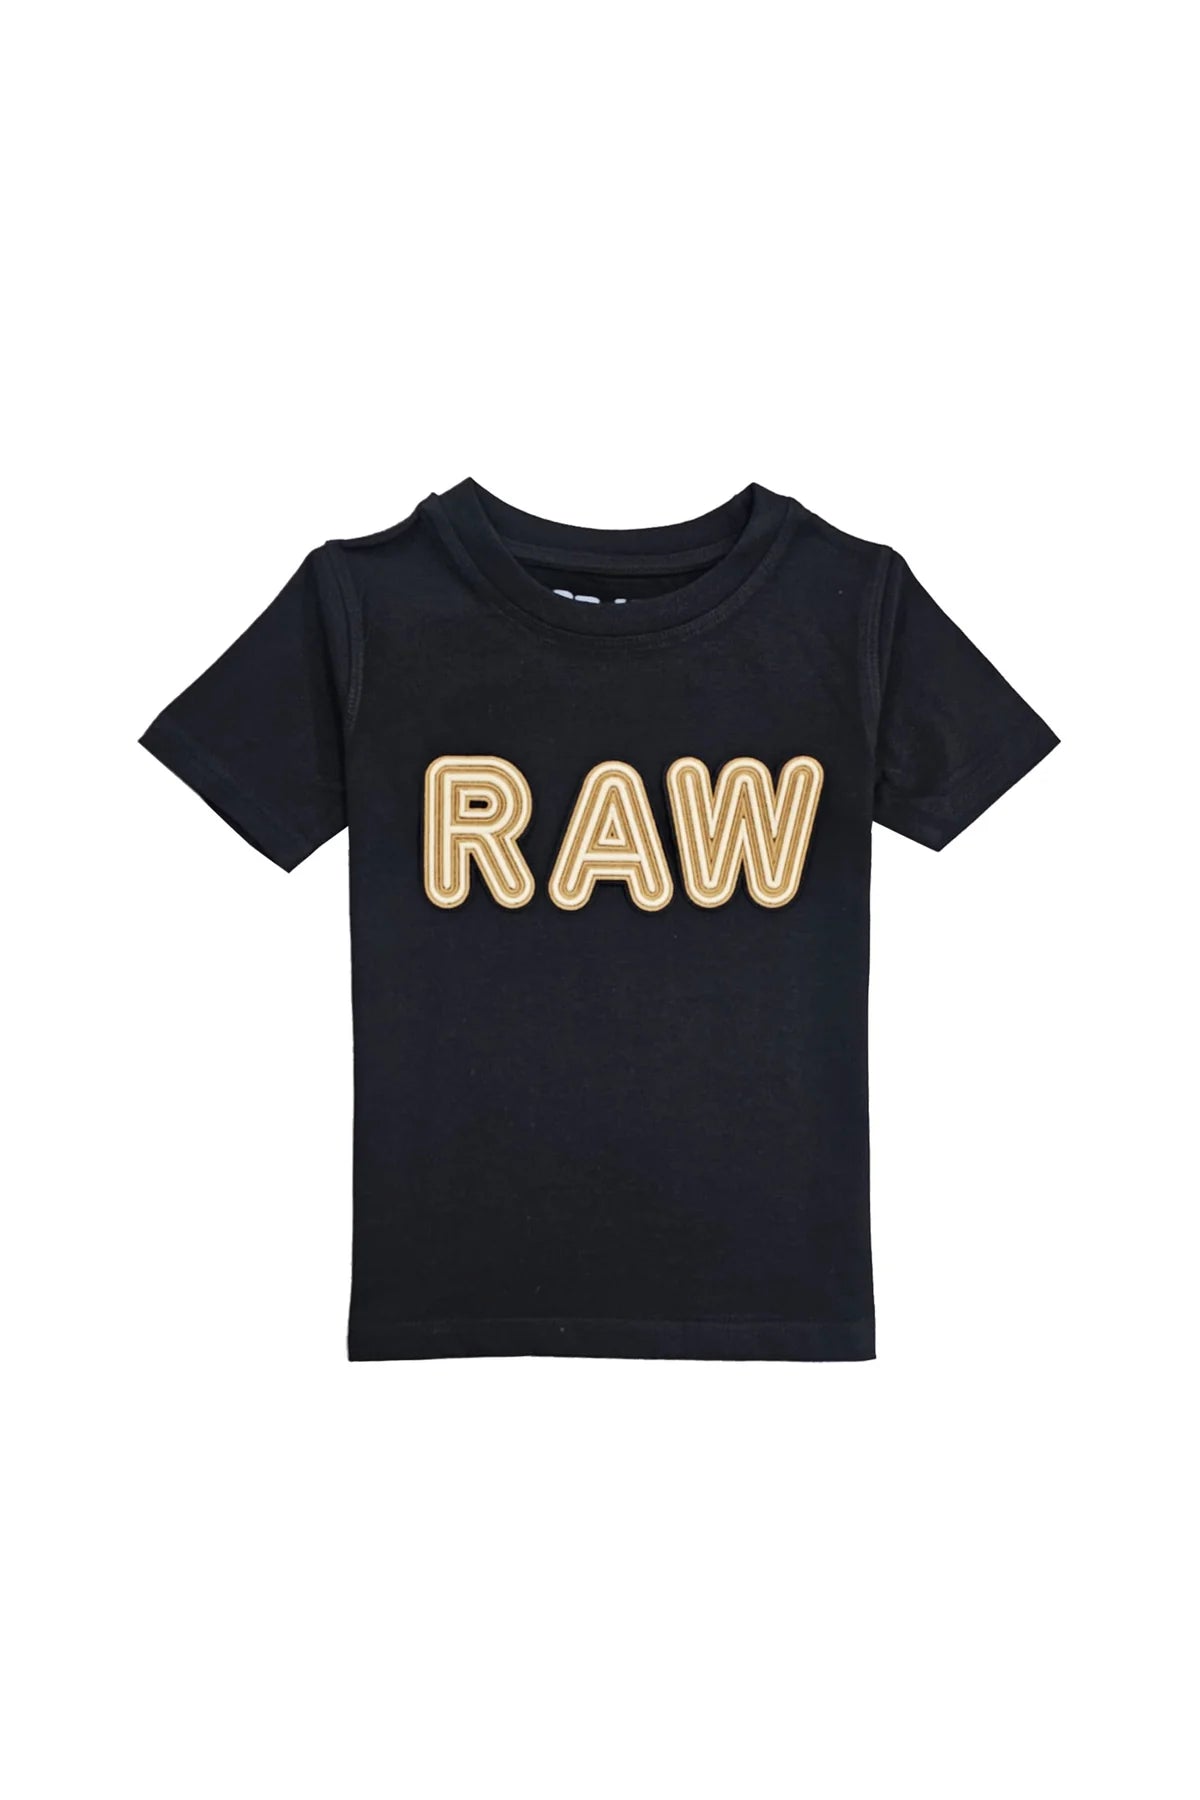 Kids "Raw" Embroidery T-Shirt - Black/Brown/Cream